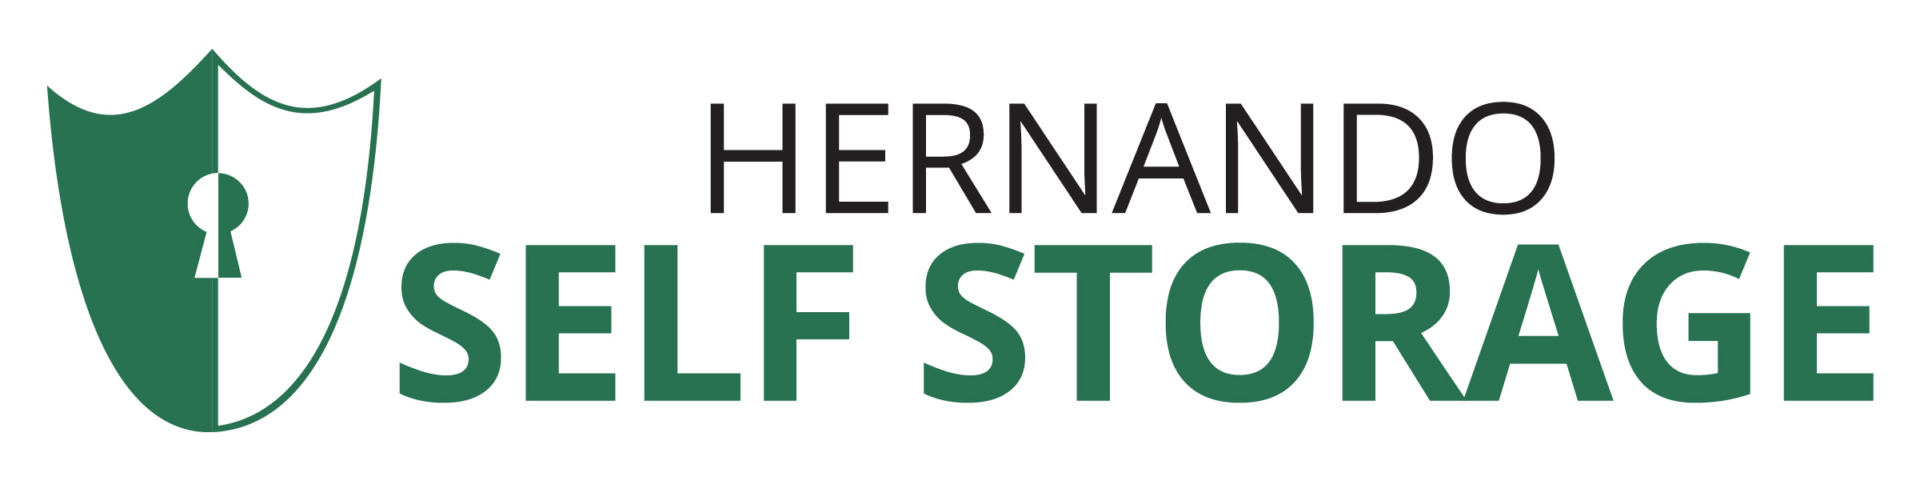 Hernando Self Storage logo.